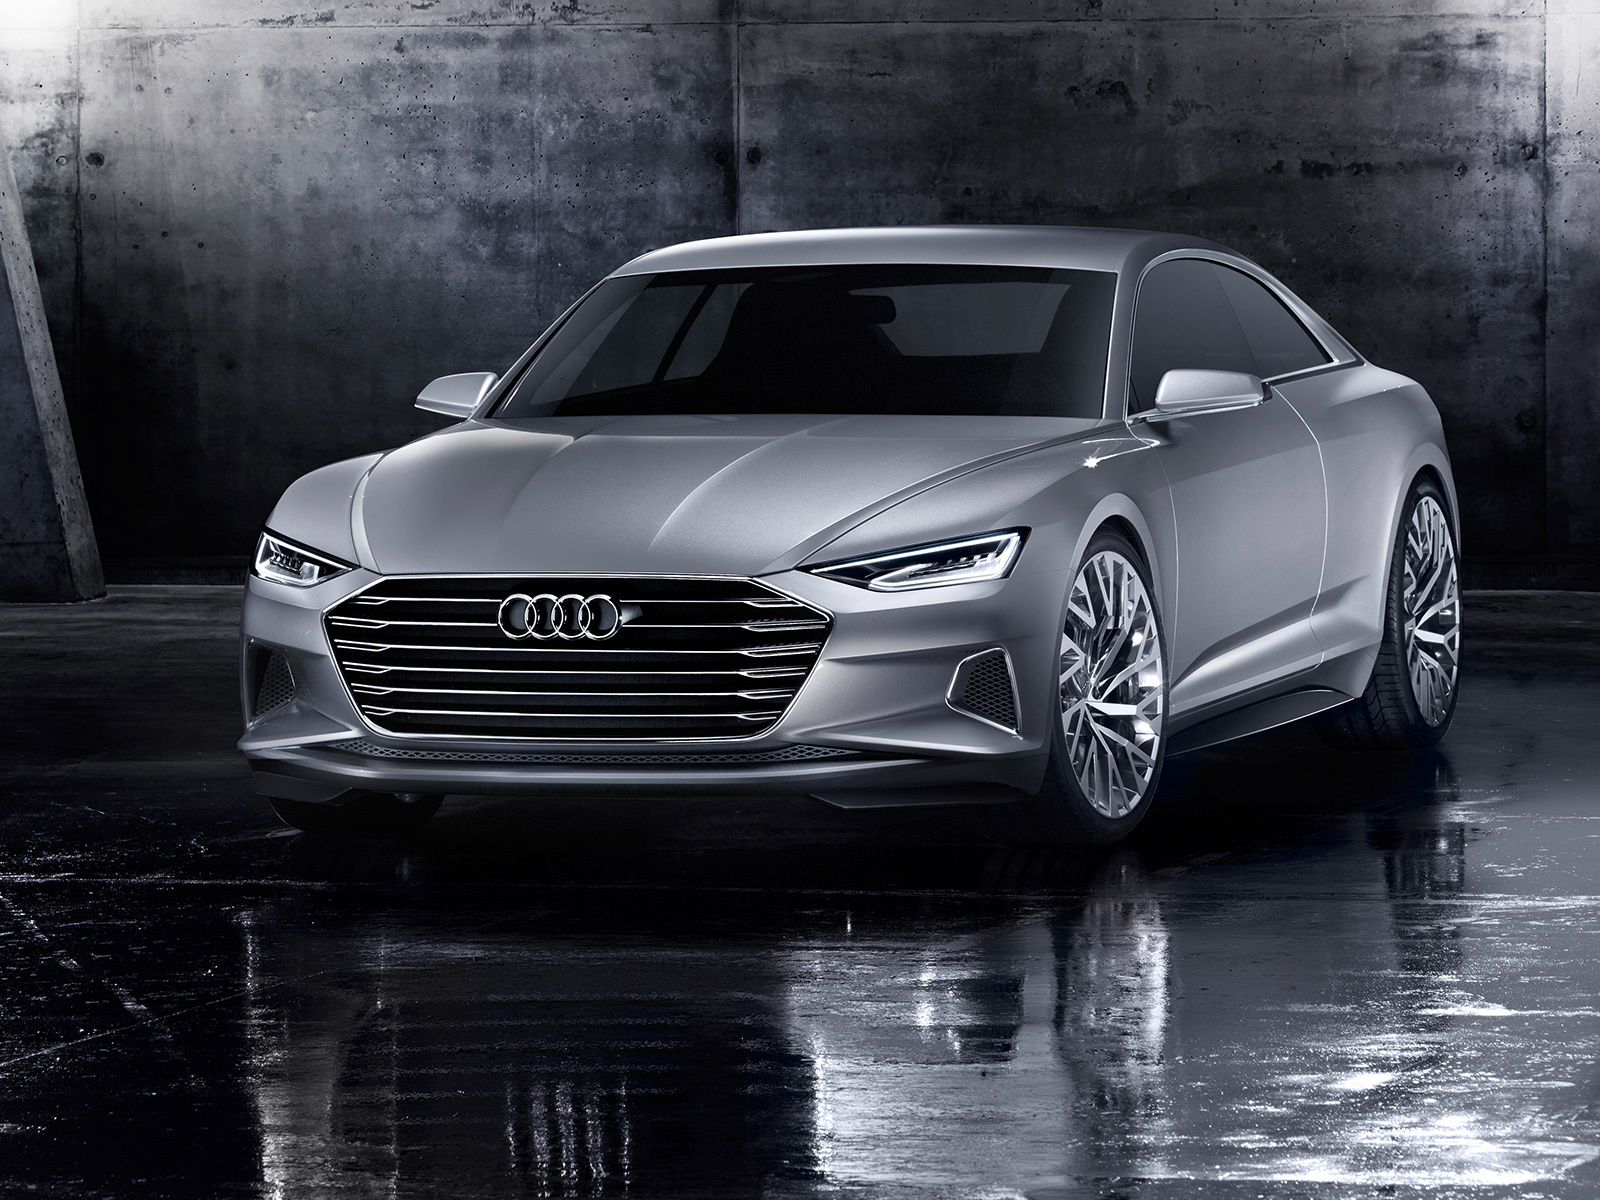 Audi A9 Concept Wallpaper Image Photos Pictures Background